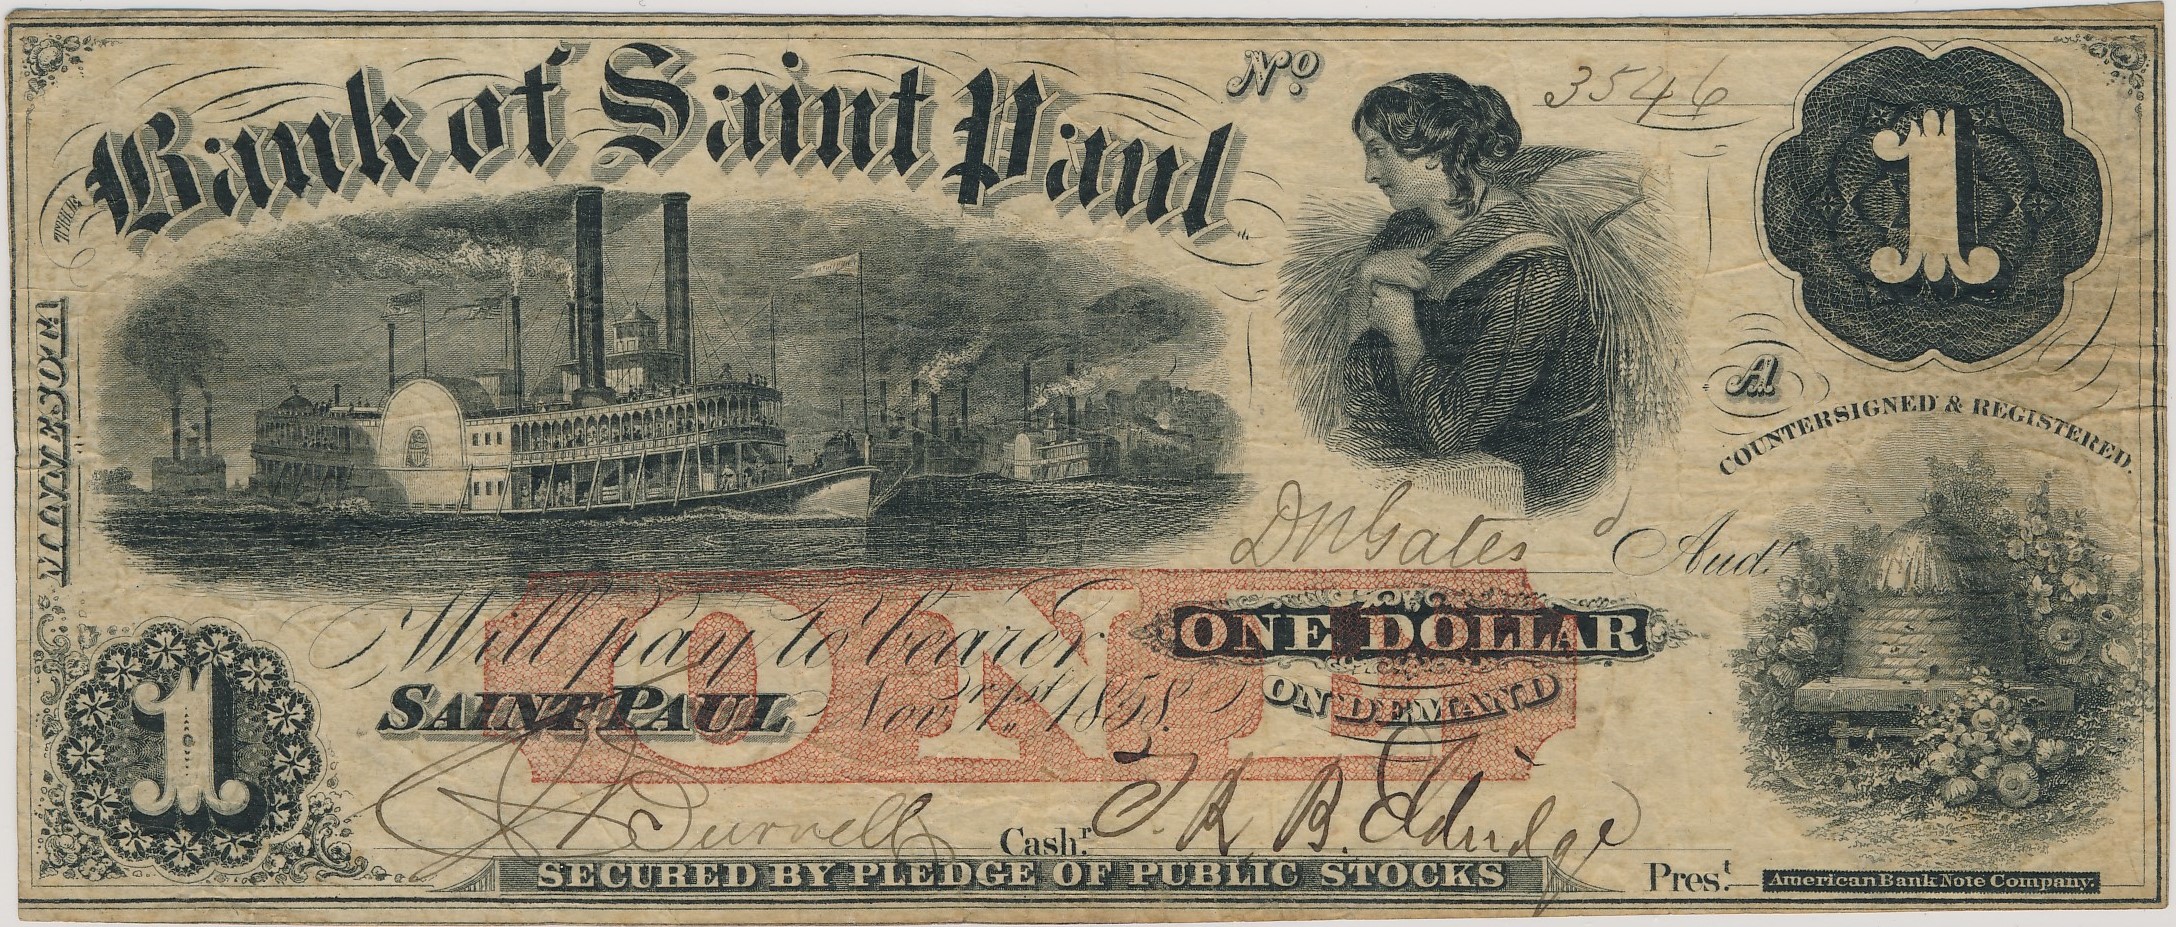 $1 Bank of Saint Paul